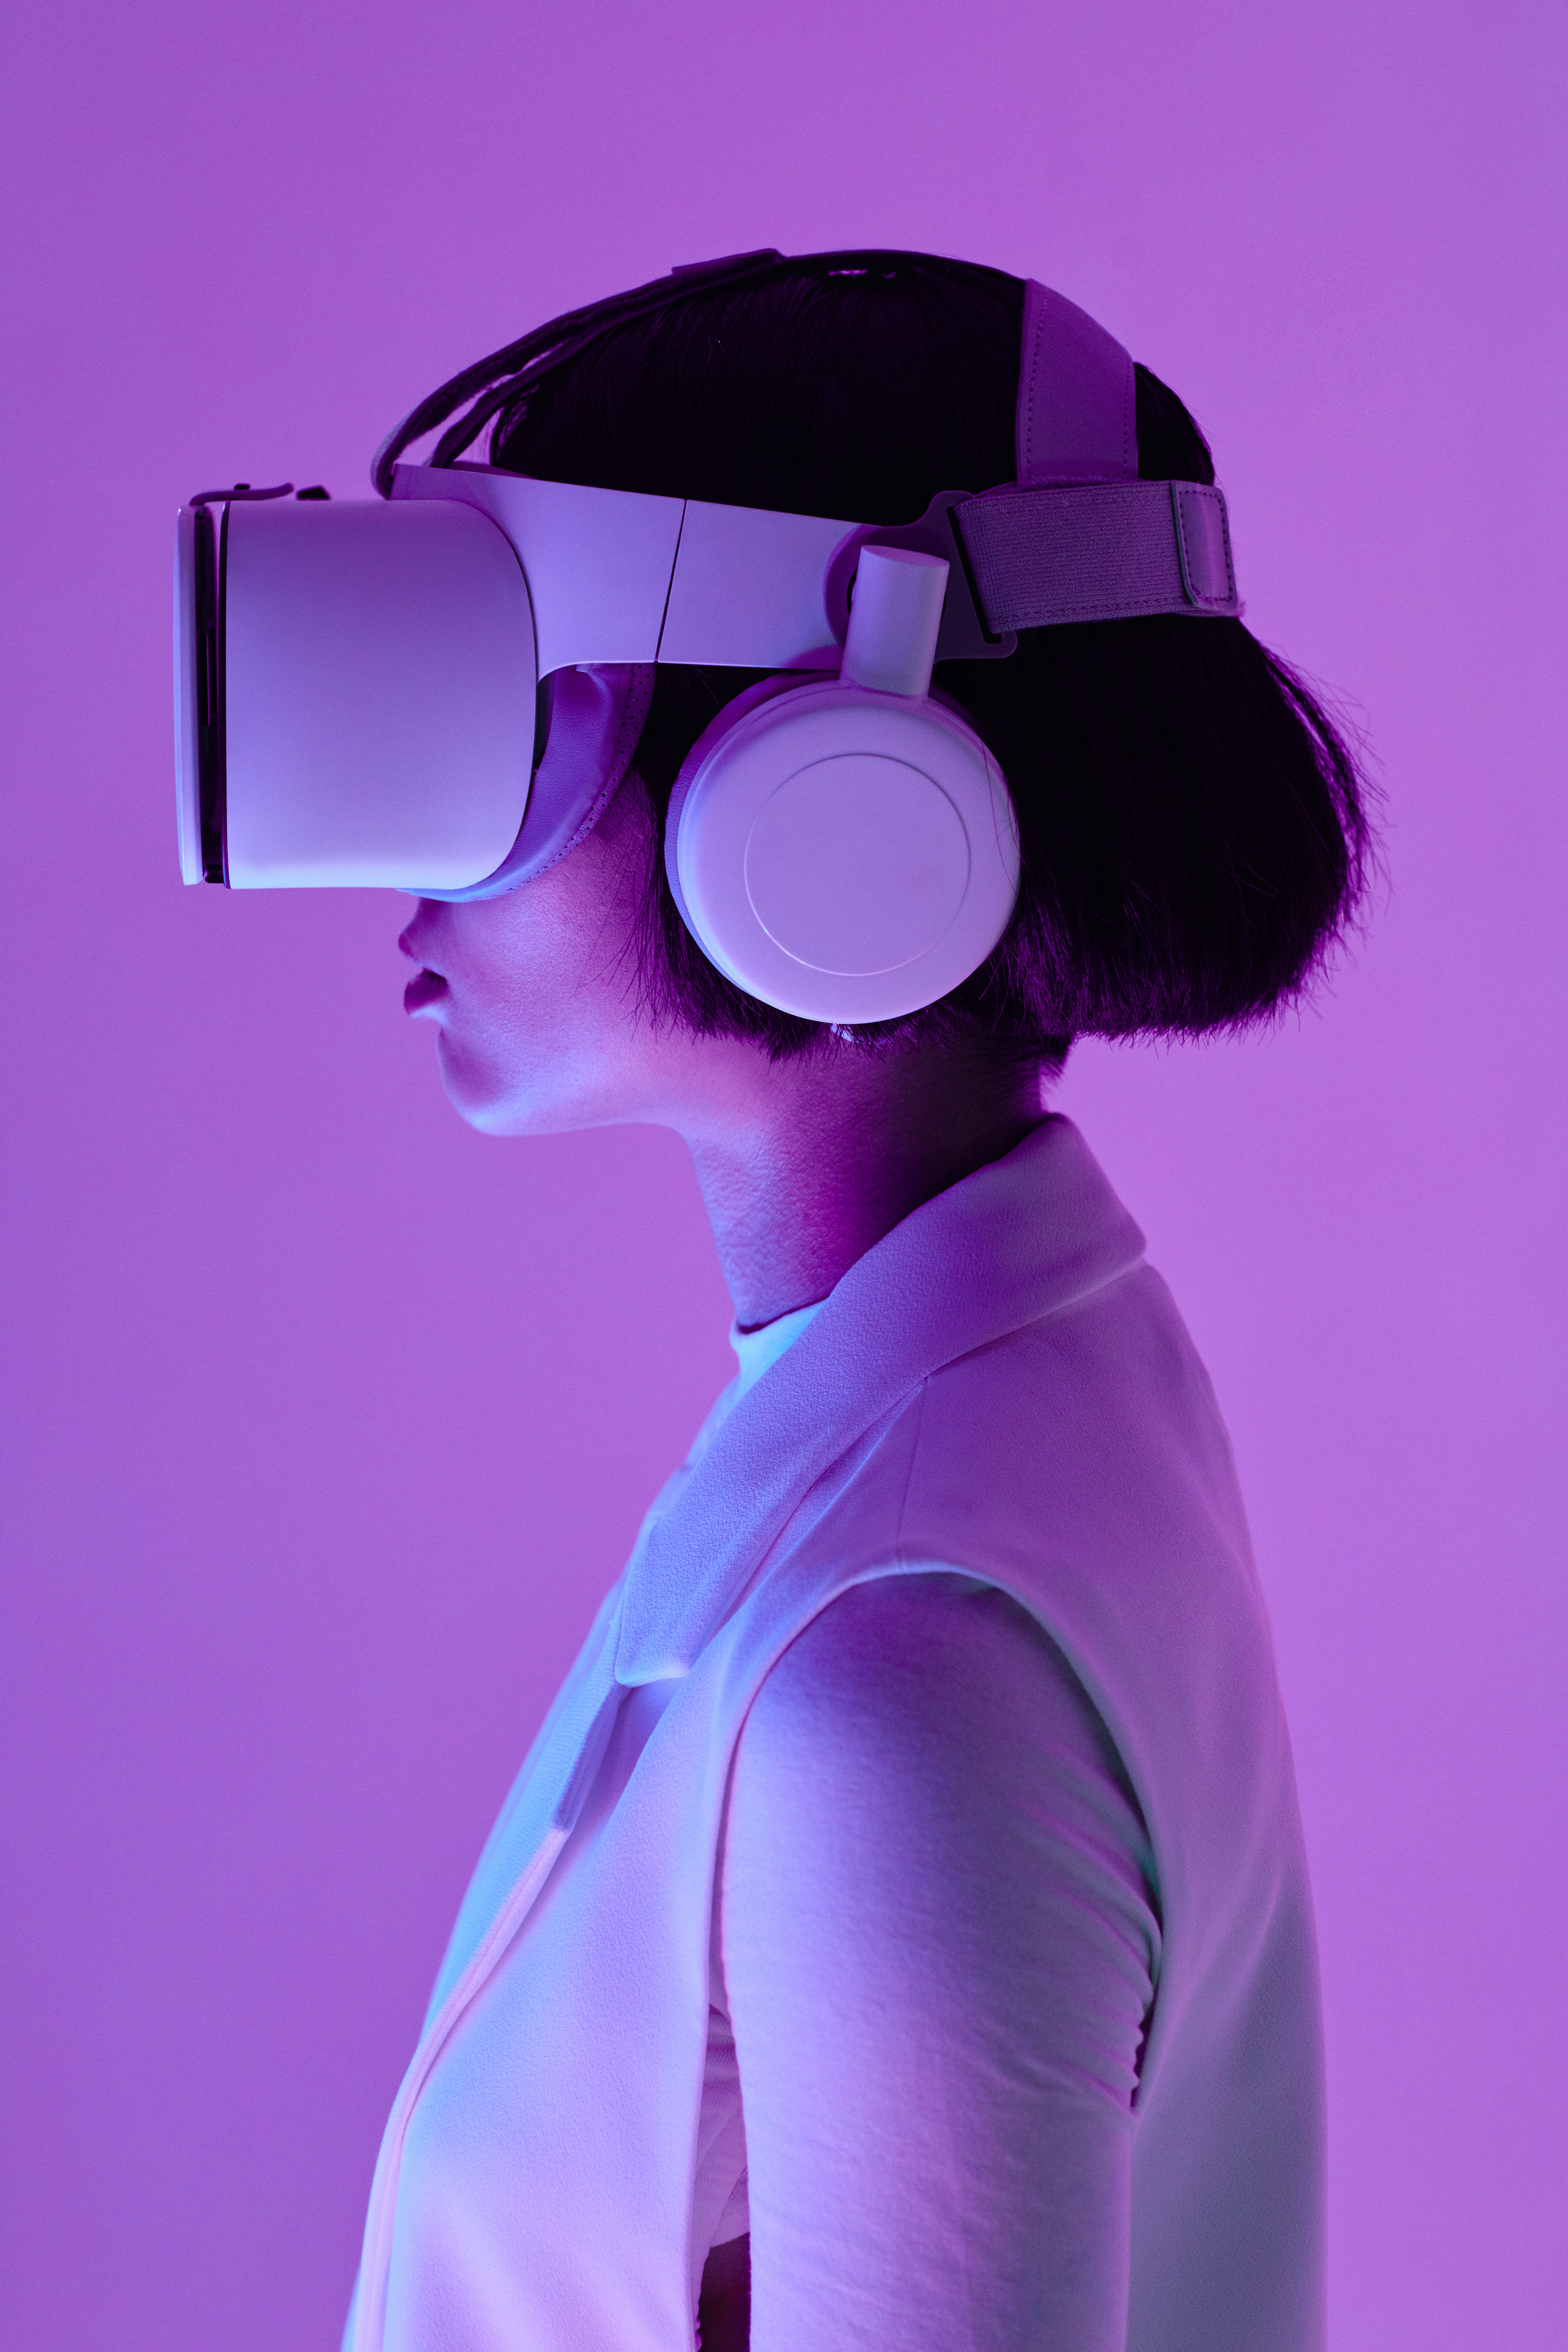 Next generation Virtual Reality glasses